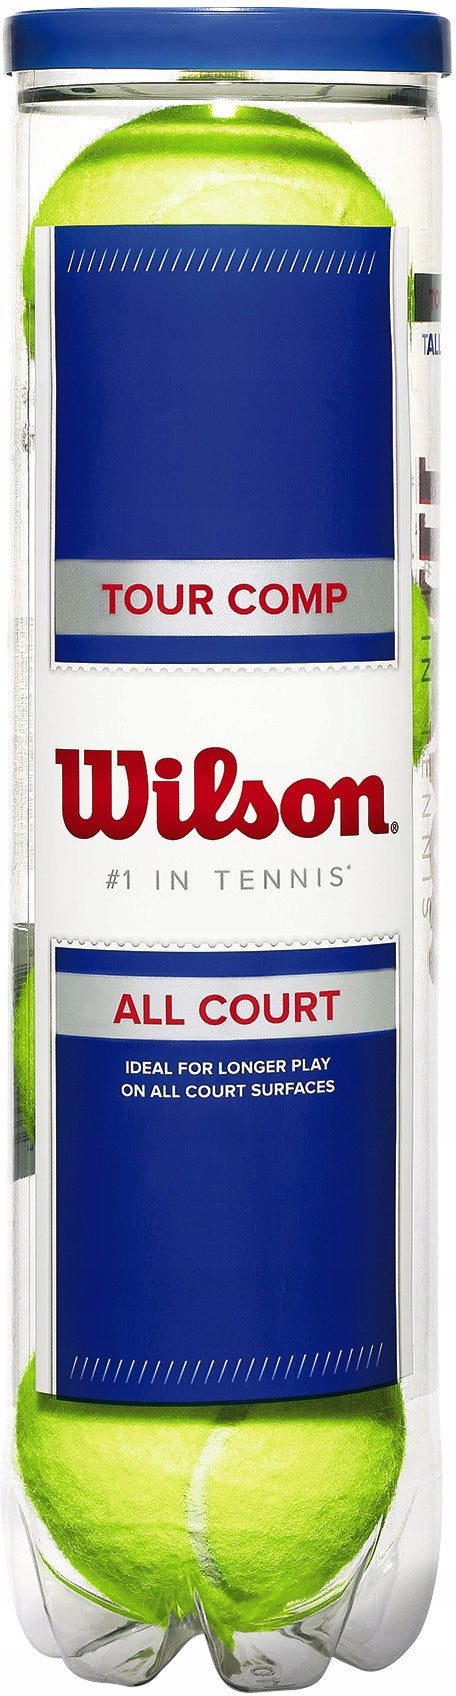 Wilson Tour Comp All Court Tennis Balls - tube of 4 balls